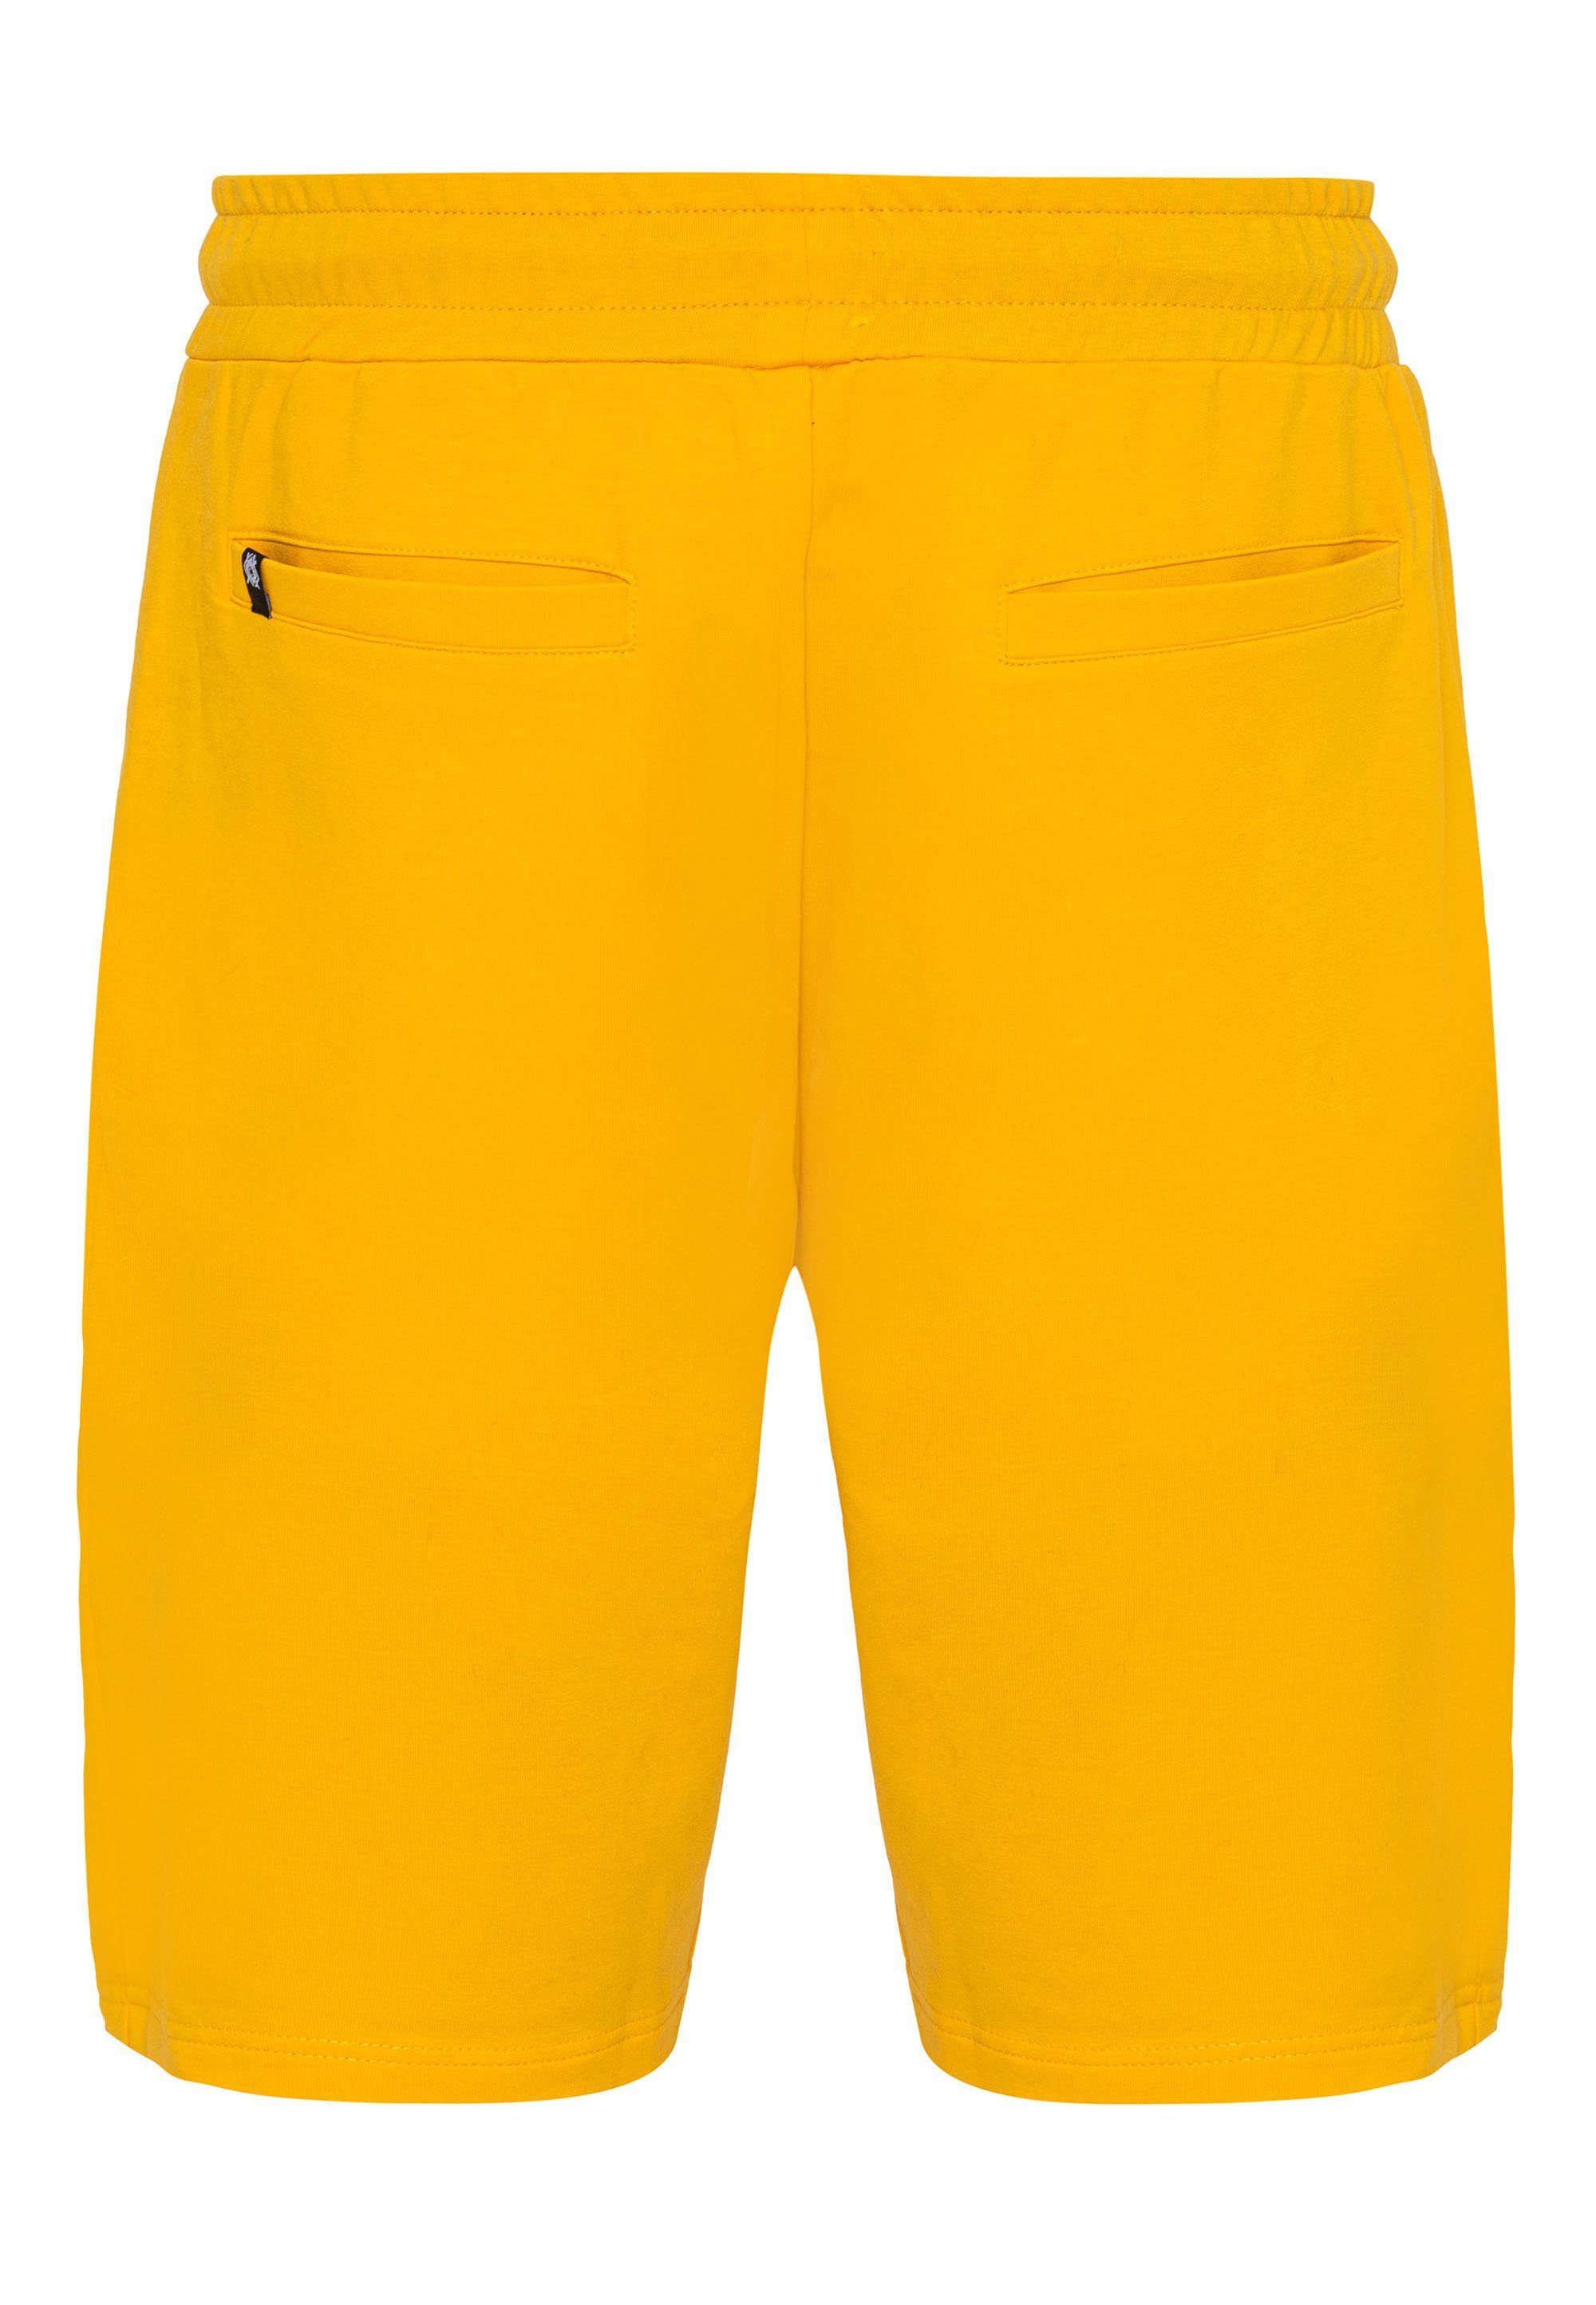 Cipo & Baxx Shorts gelb in sportlichem Look